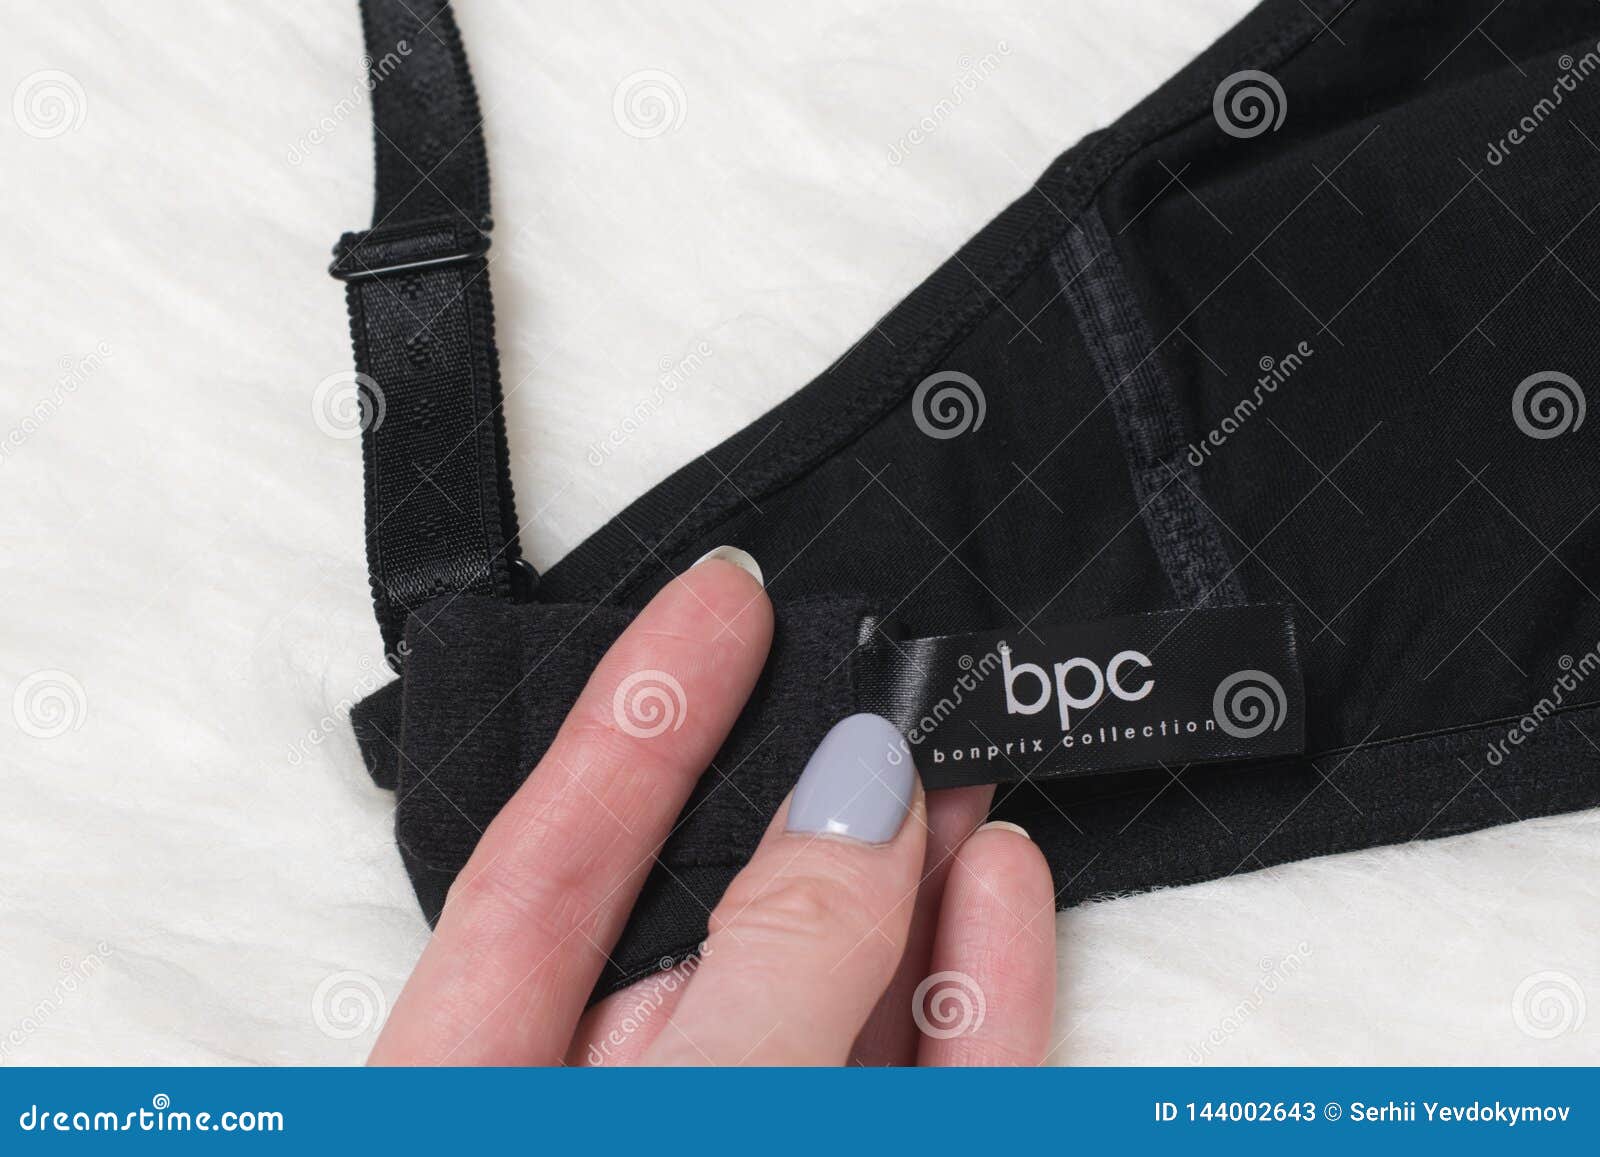 KHARKOV, UKRAINE - MARCH 04, 2019: Label BPC Bonprix Collection of Black  Cotton Bra in Female Hand. Fashion Lingerie Concept Editorial Stock Photo -  Image of female, elegant: 144002643